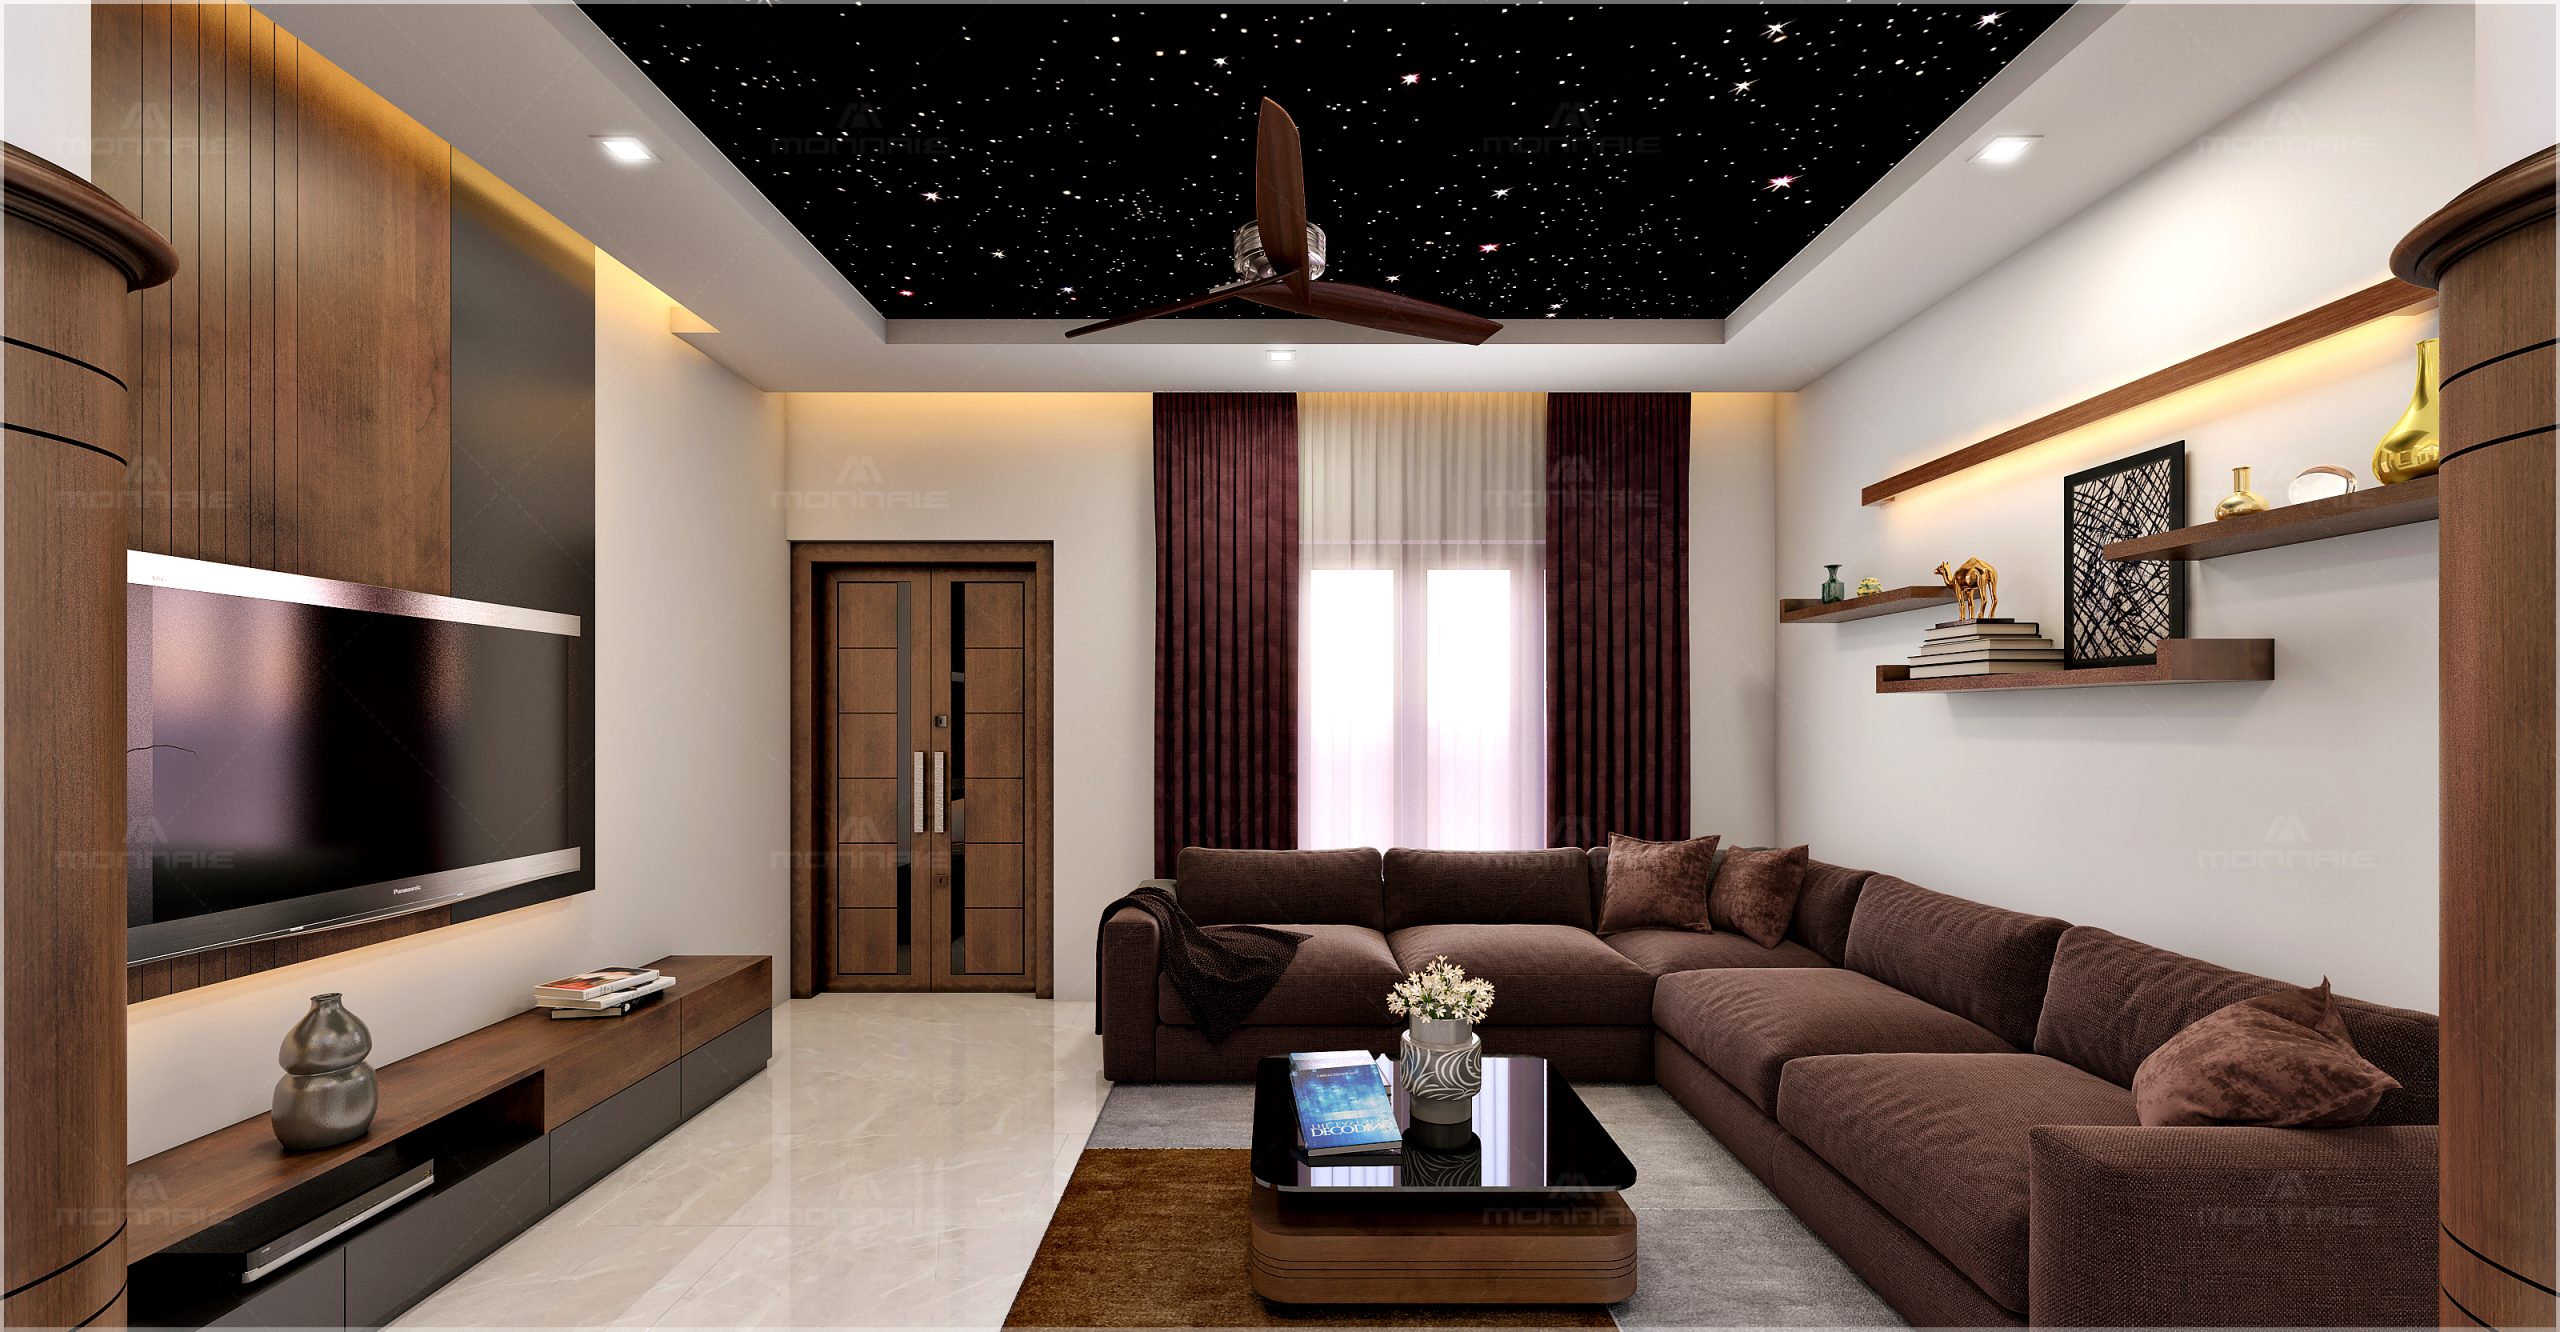 living room interior design in kerala